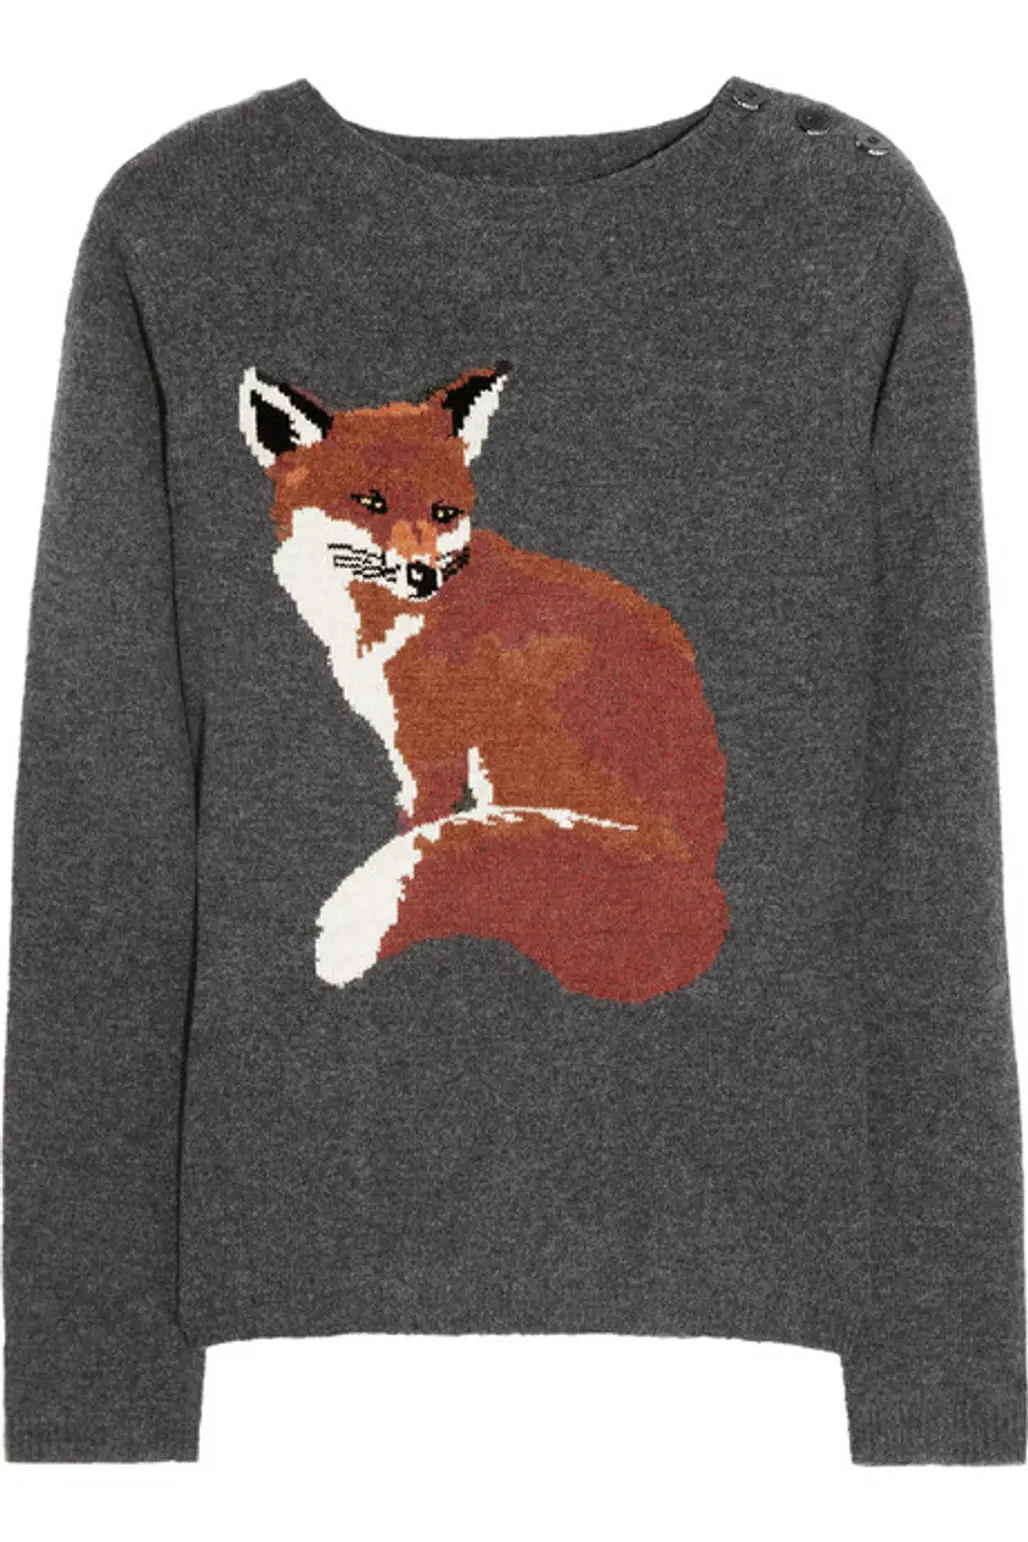 Aubin & Willis Fox Motif Sweater